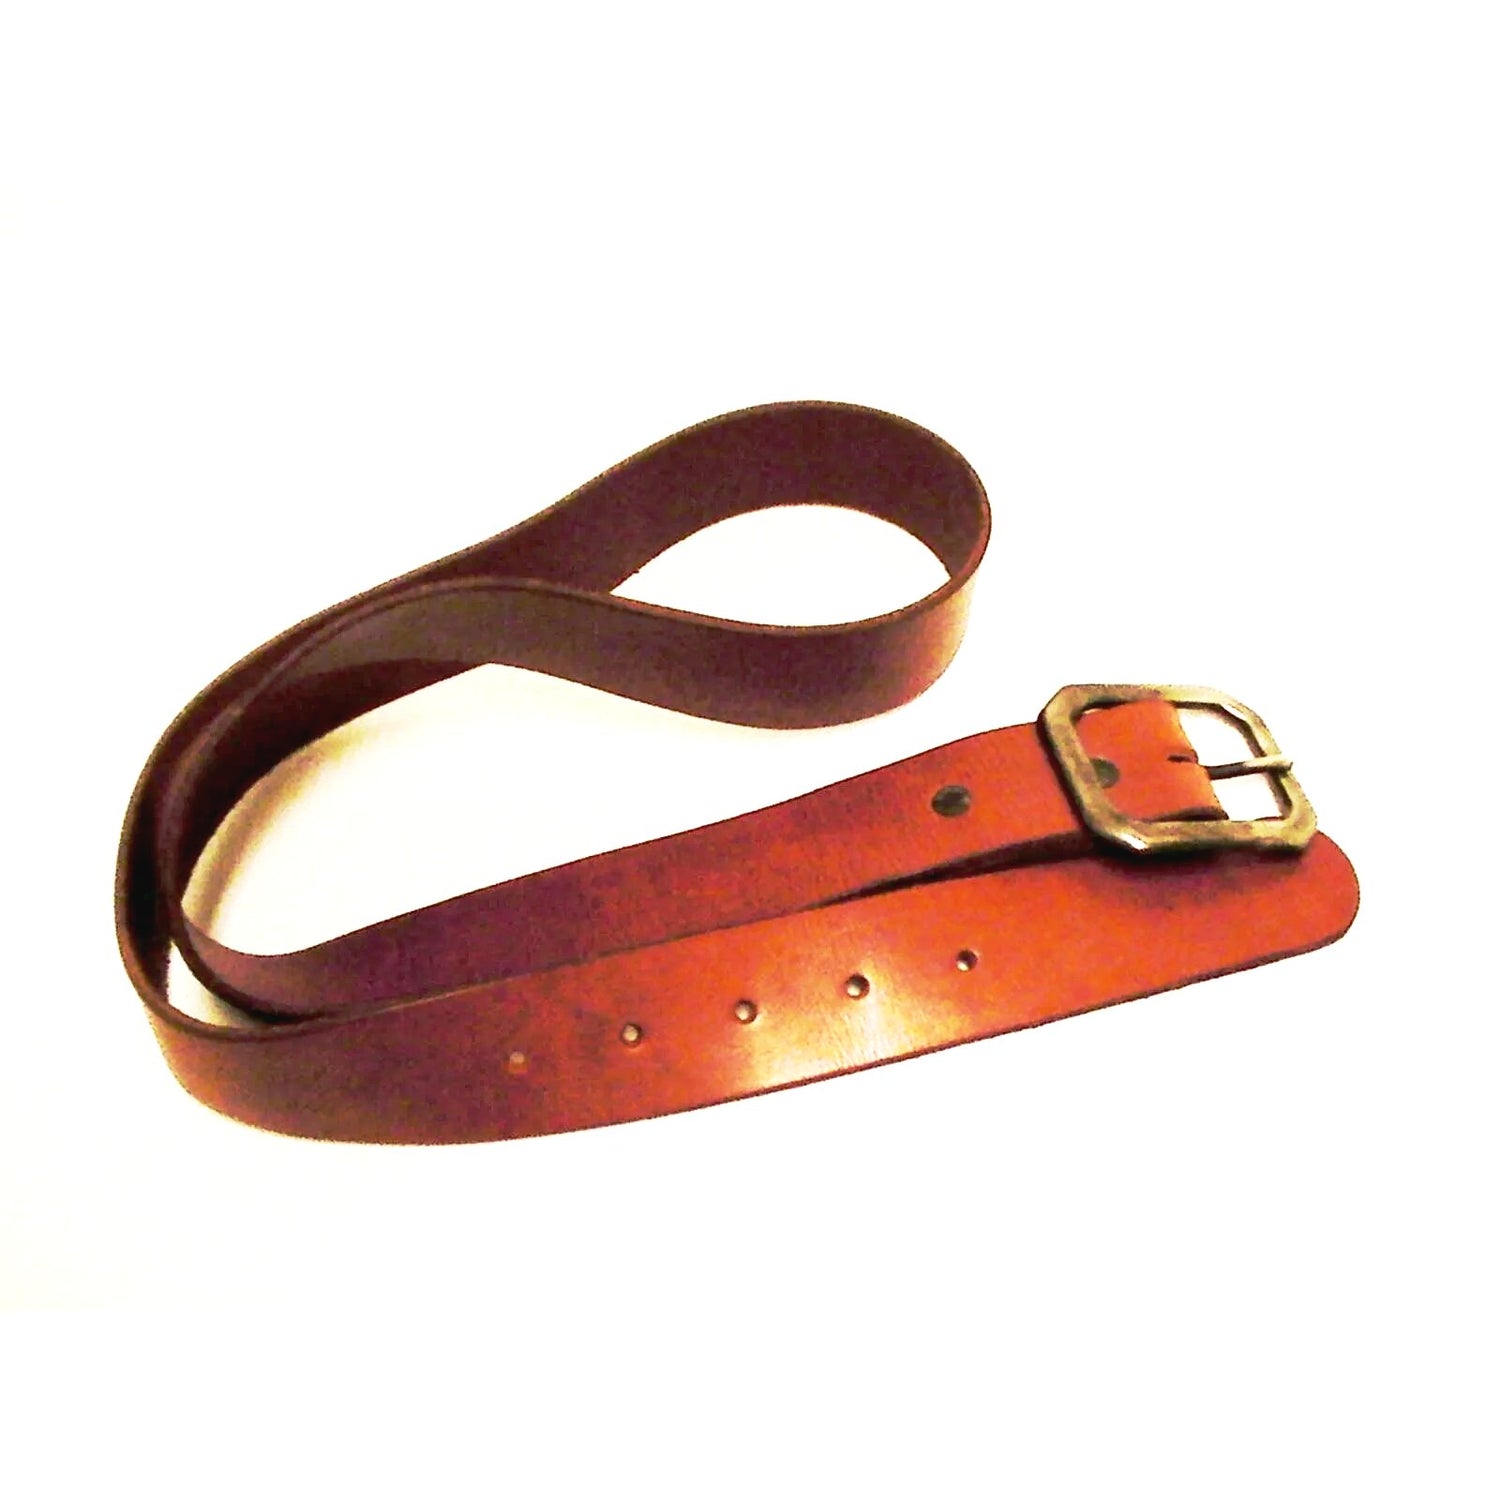 True religion belt genuine leather gunmetal buckle size 38 inch lite brown new